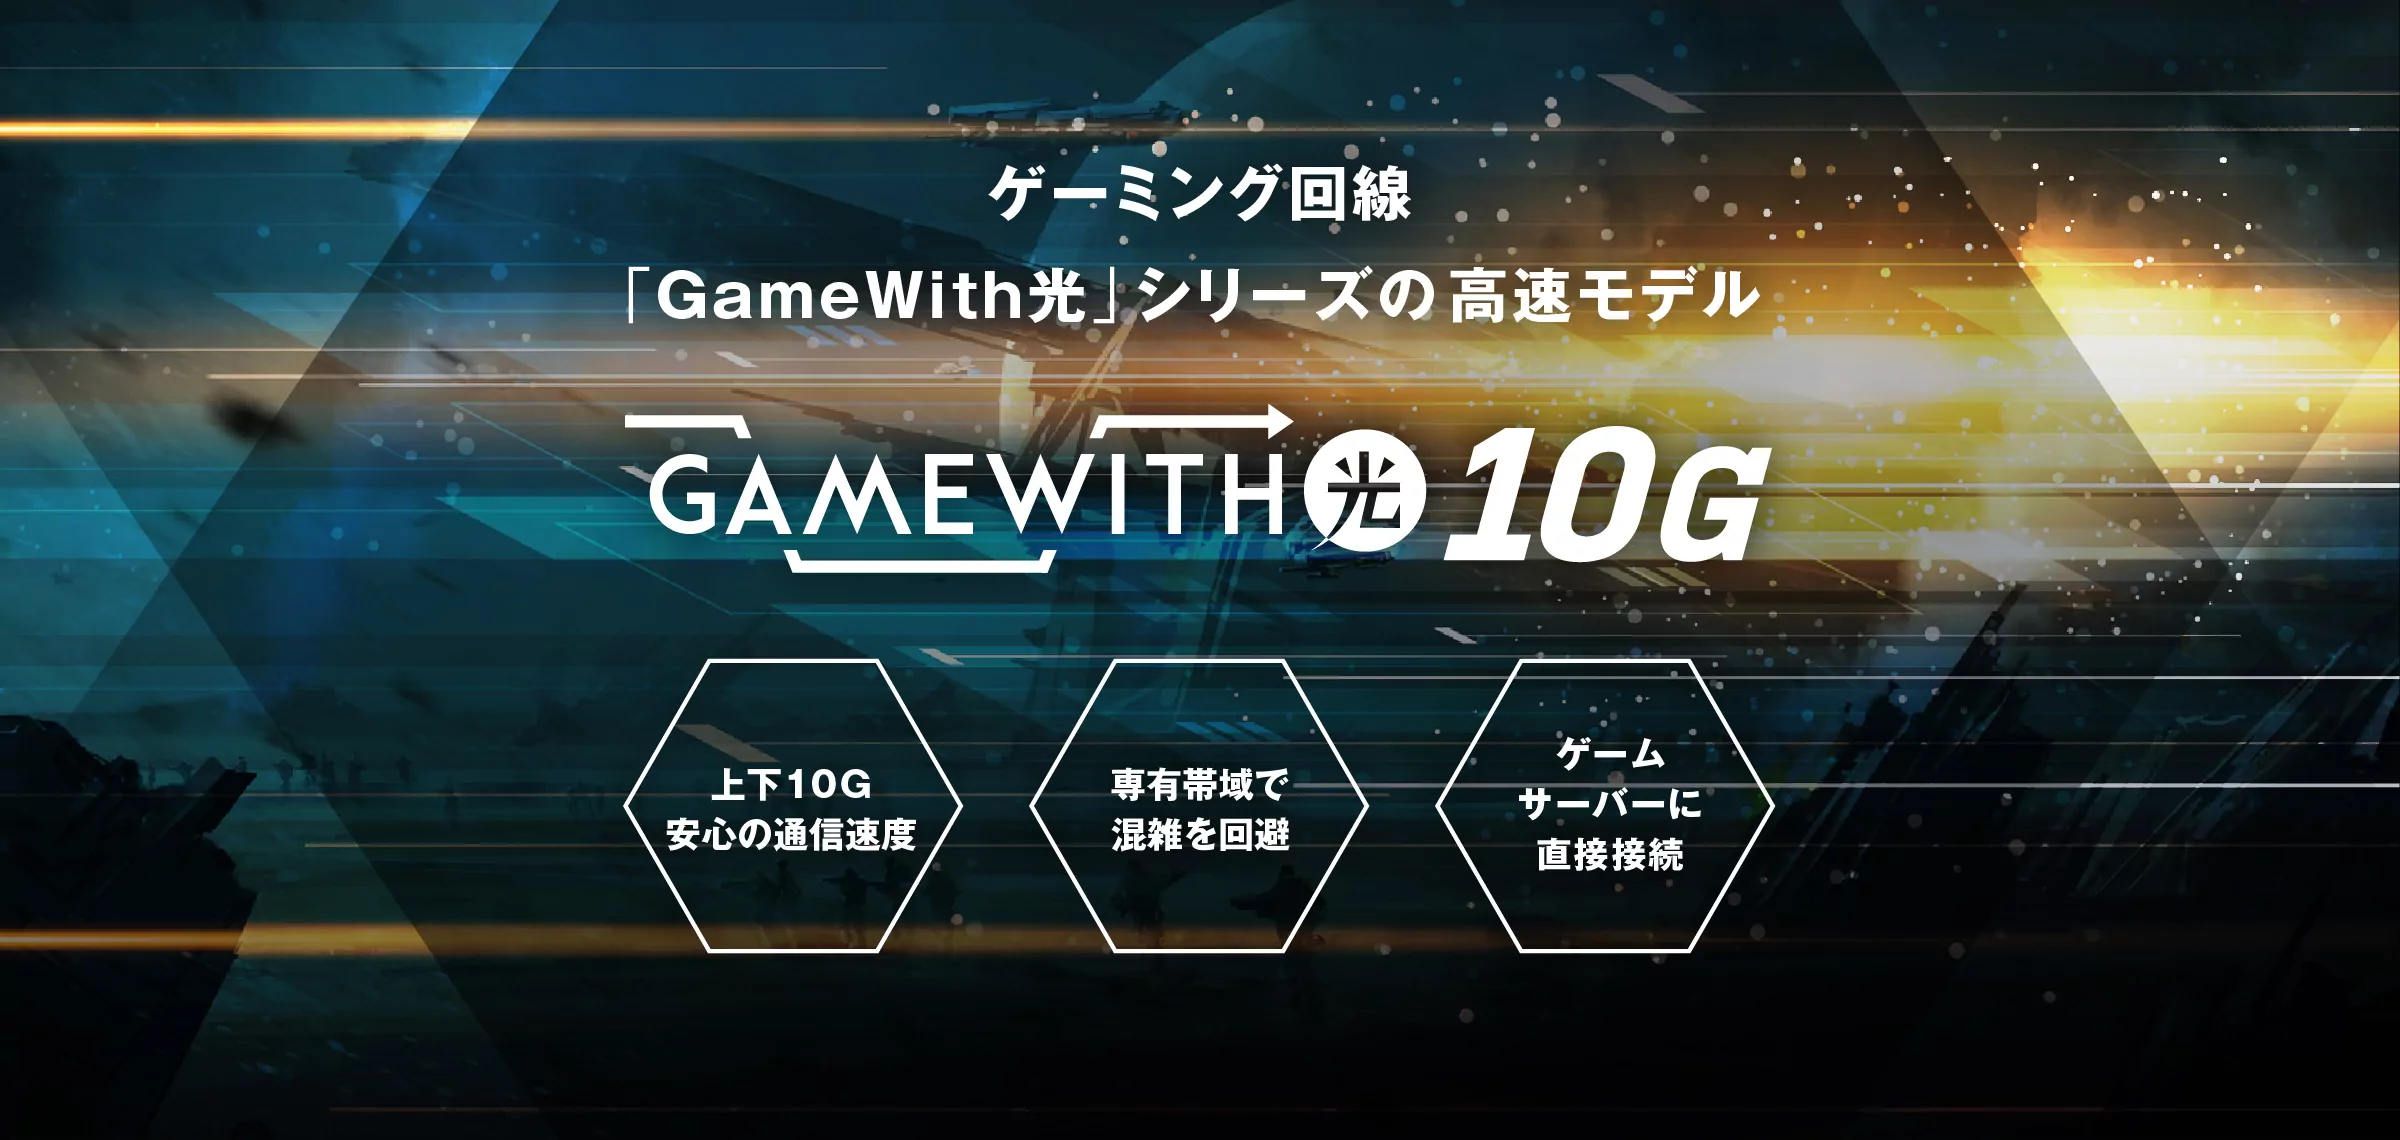 GameWith光10Gキャンペーン